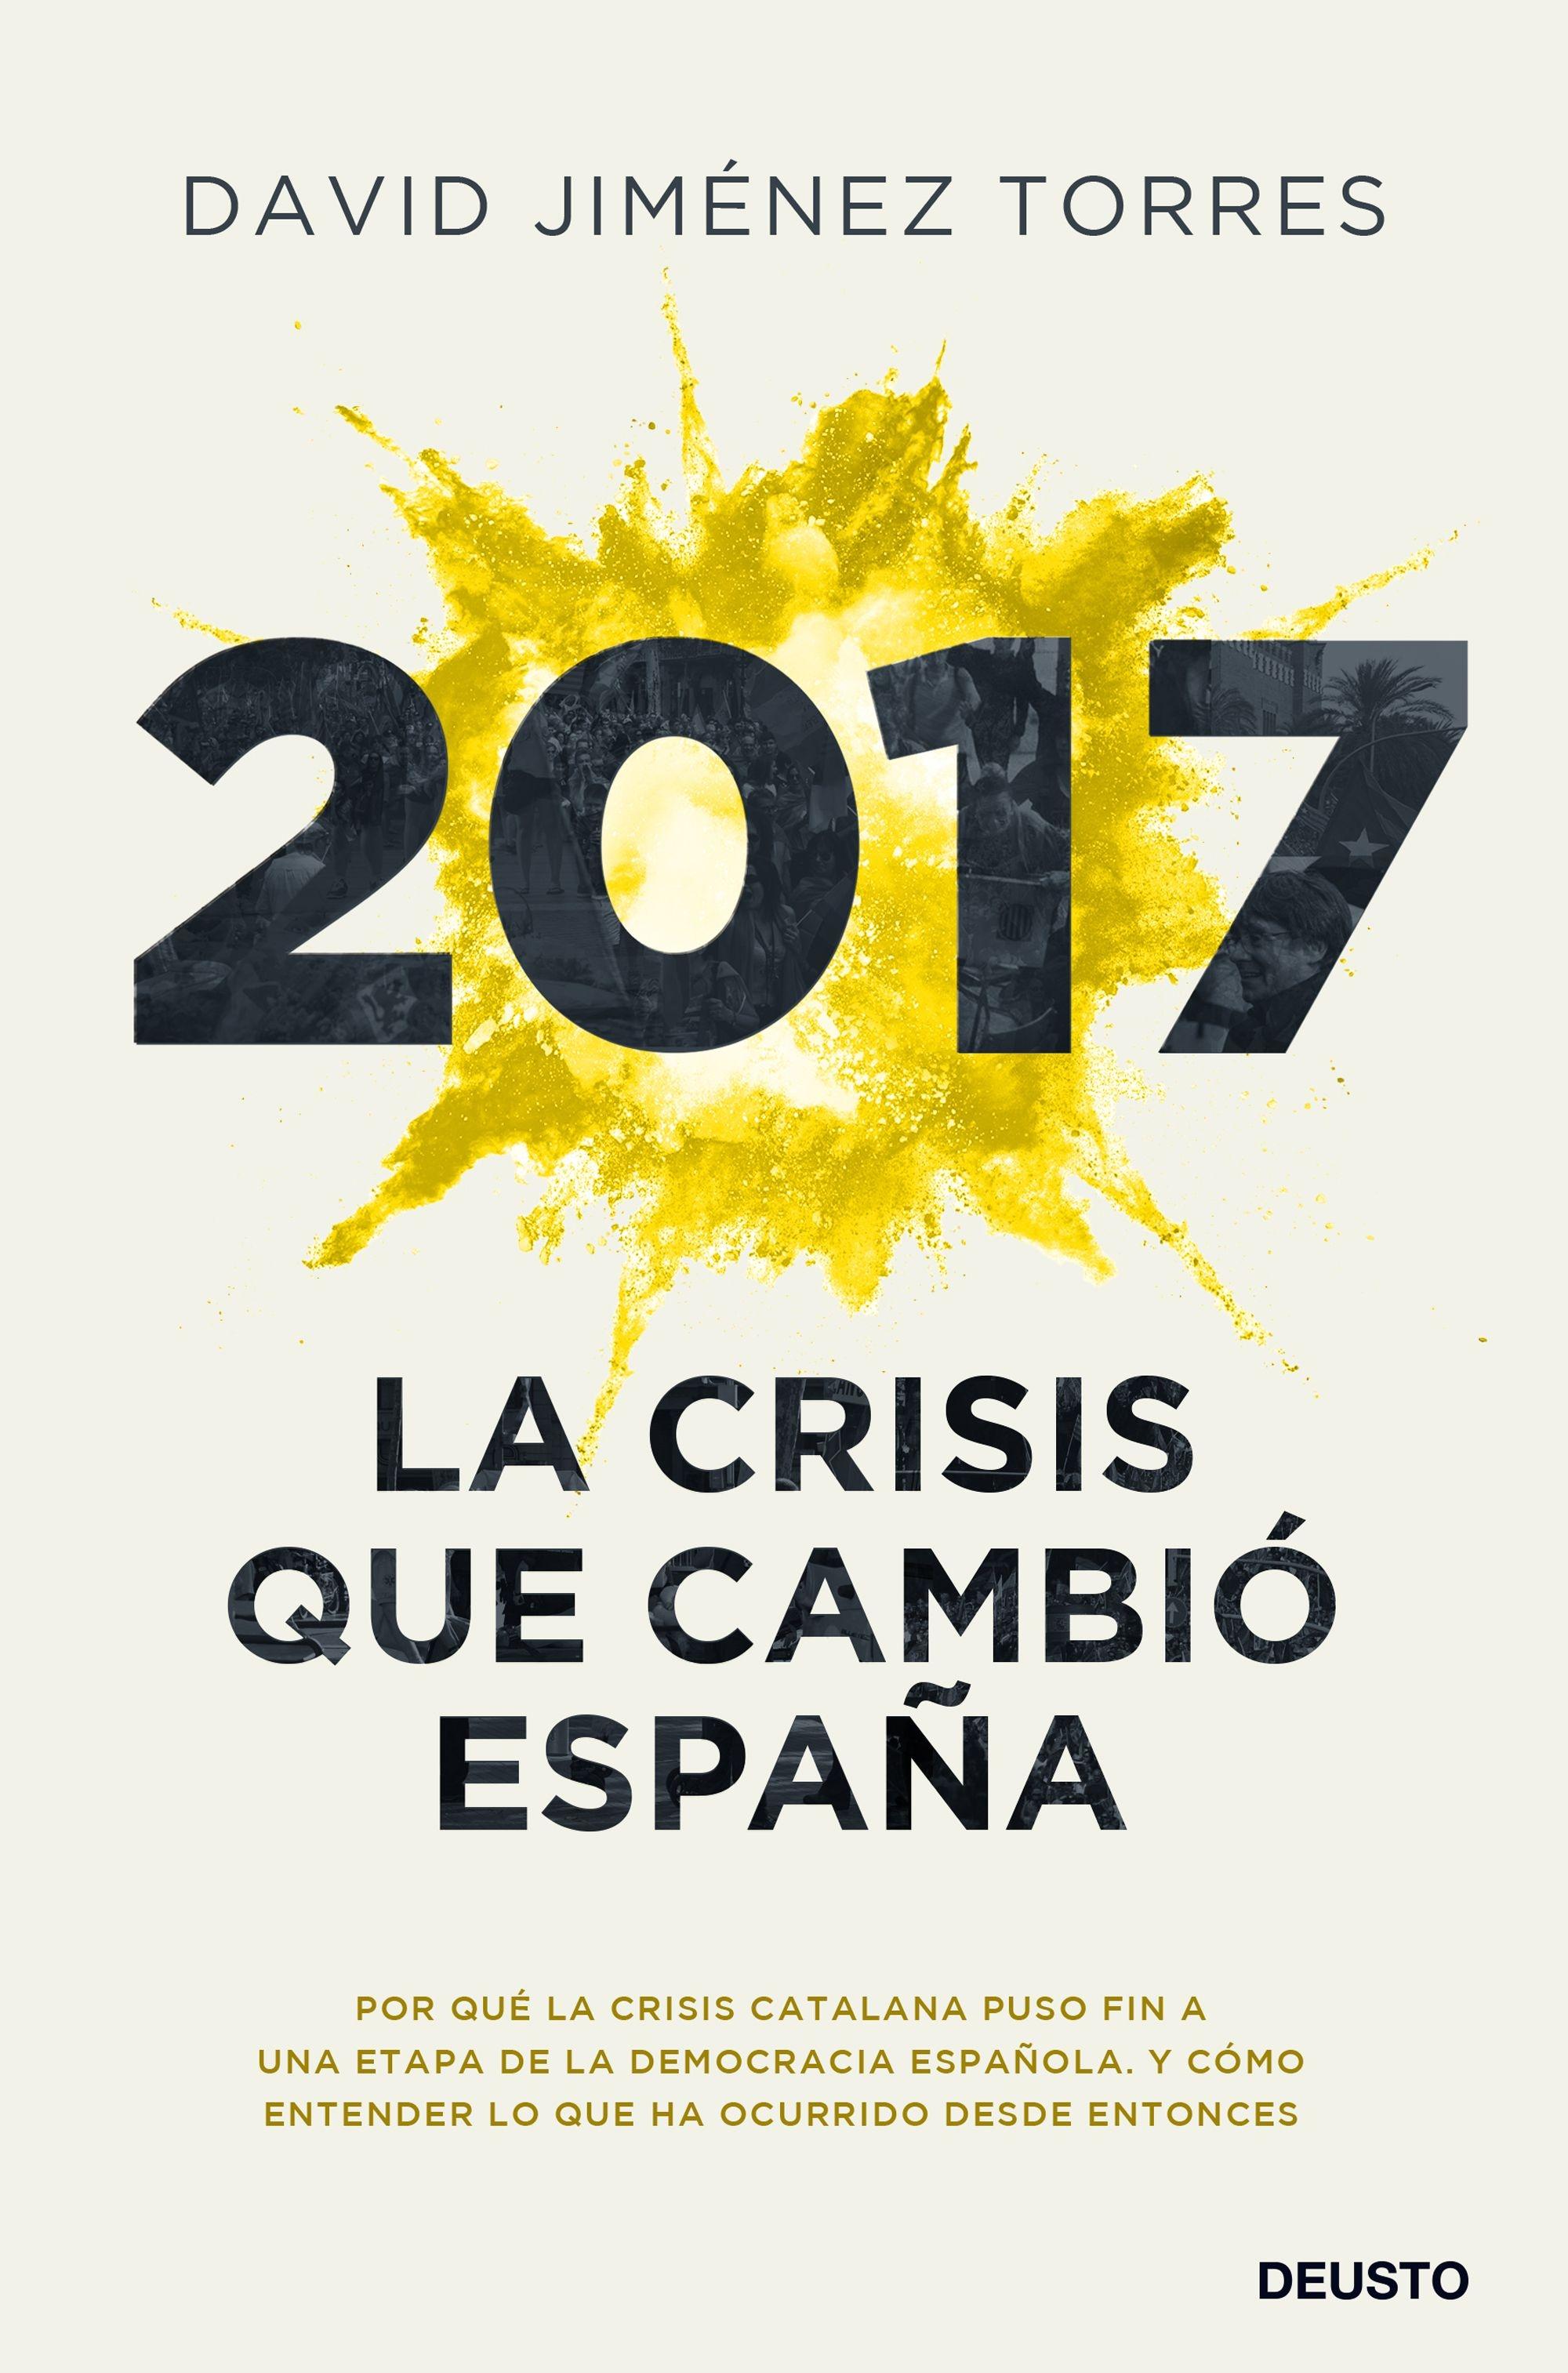 2017 "La crisis que cambió España"